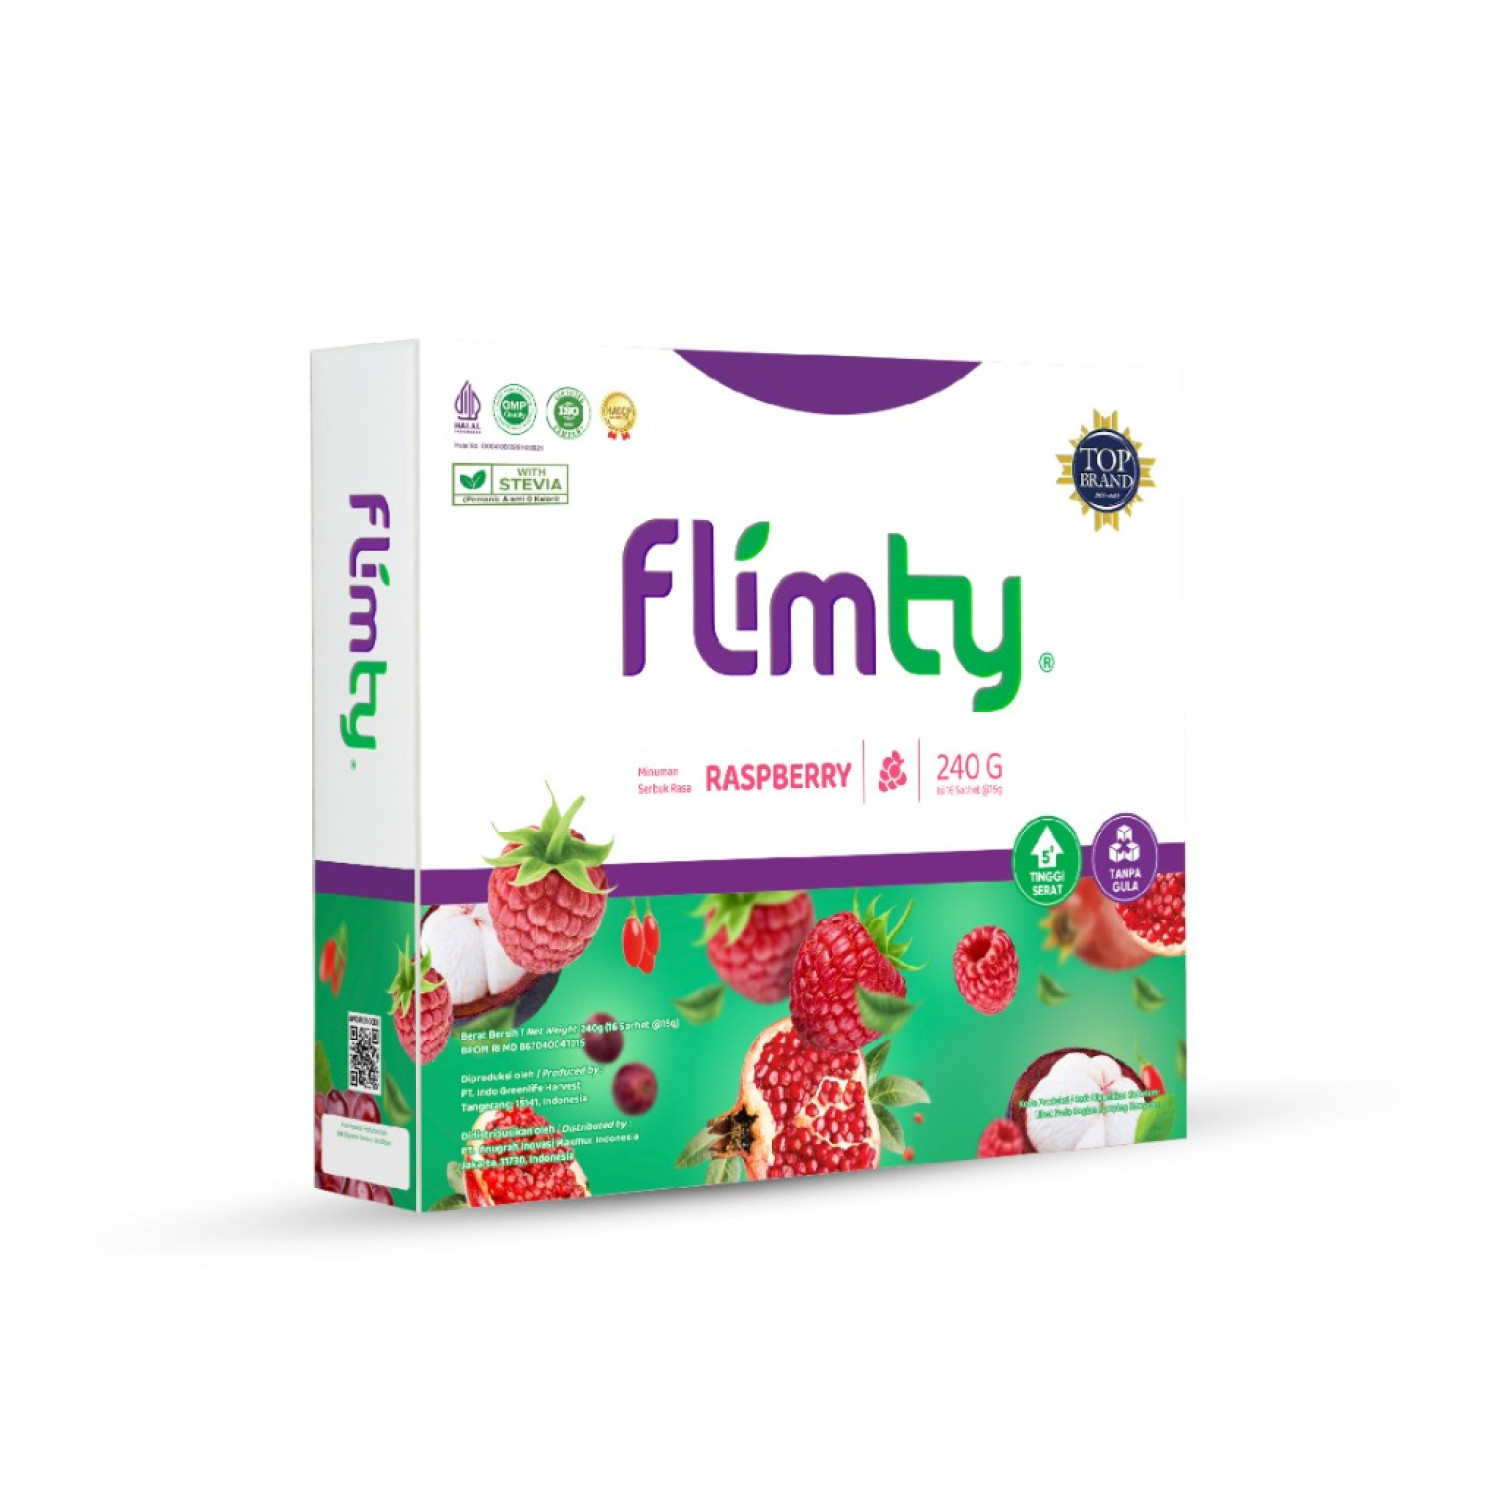 flimty-raspberry-16-6595076c738b0.jpeg